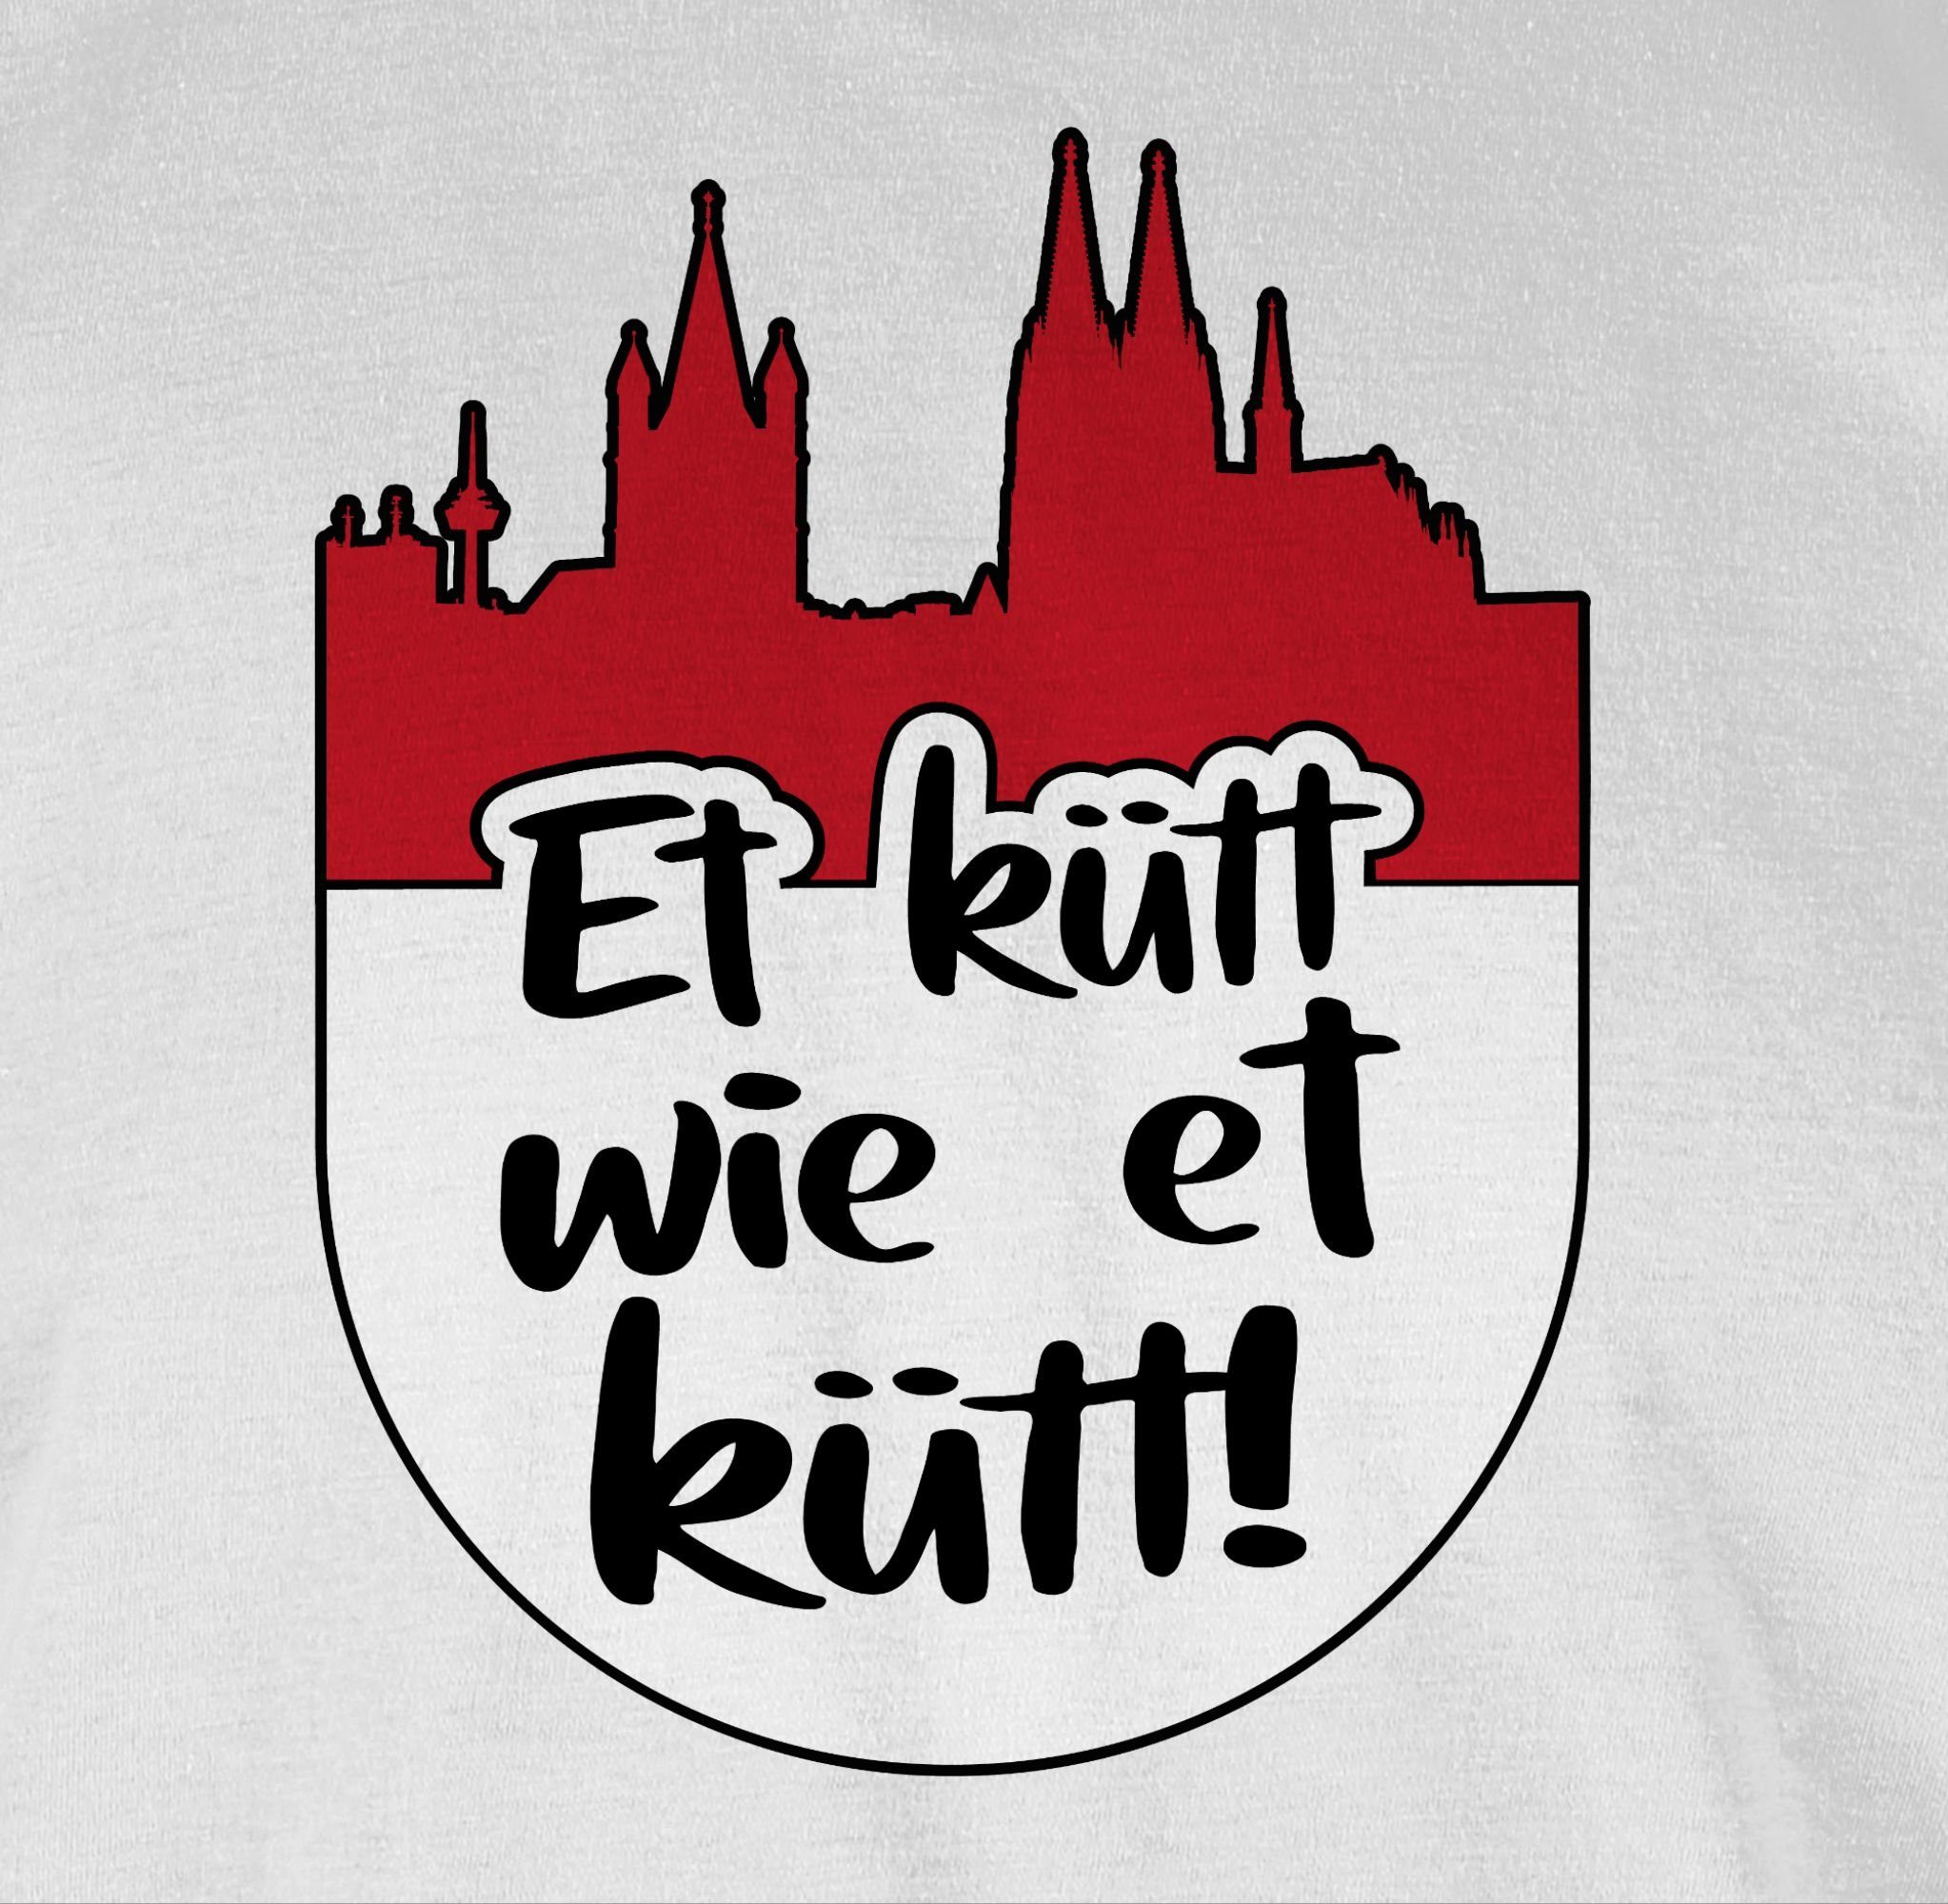 weiß T-Shirt Köln et Kölsch rot - 2 Weiß Shirtracer kütt Et Karneval Echte wie Grundgesetz Kölner Outfit kütt!